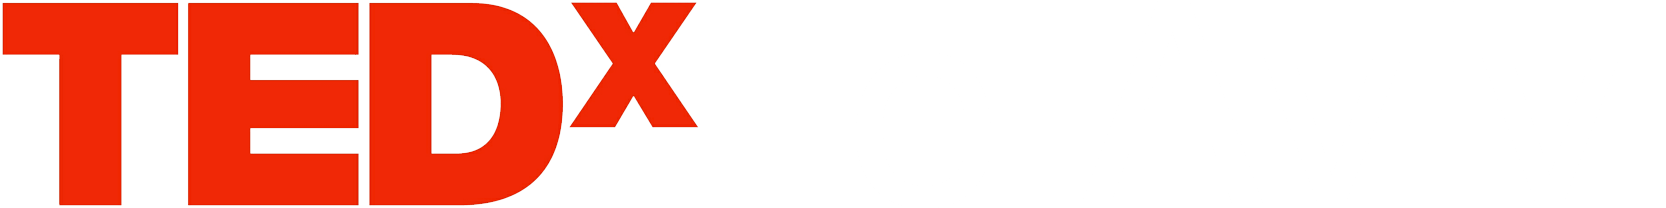 TED Talks Logo - Ted talks logo png 7 » PNG Image